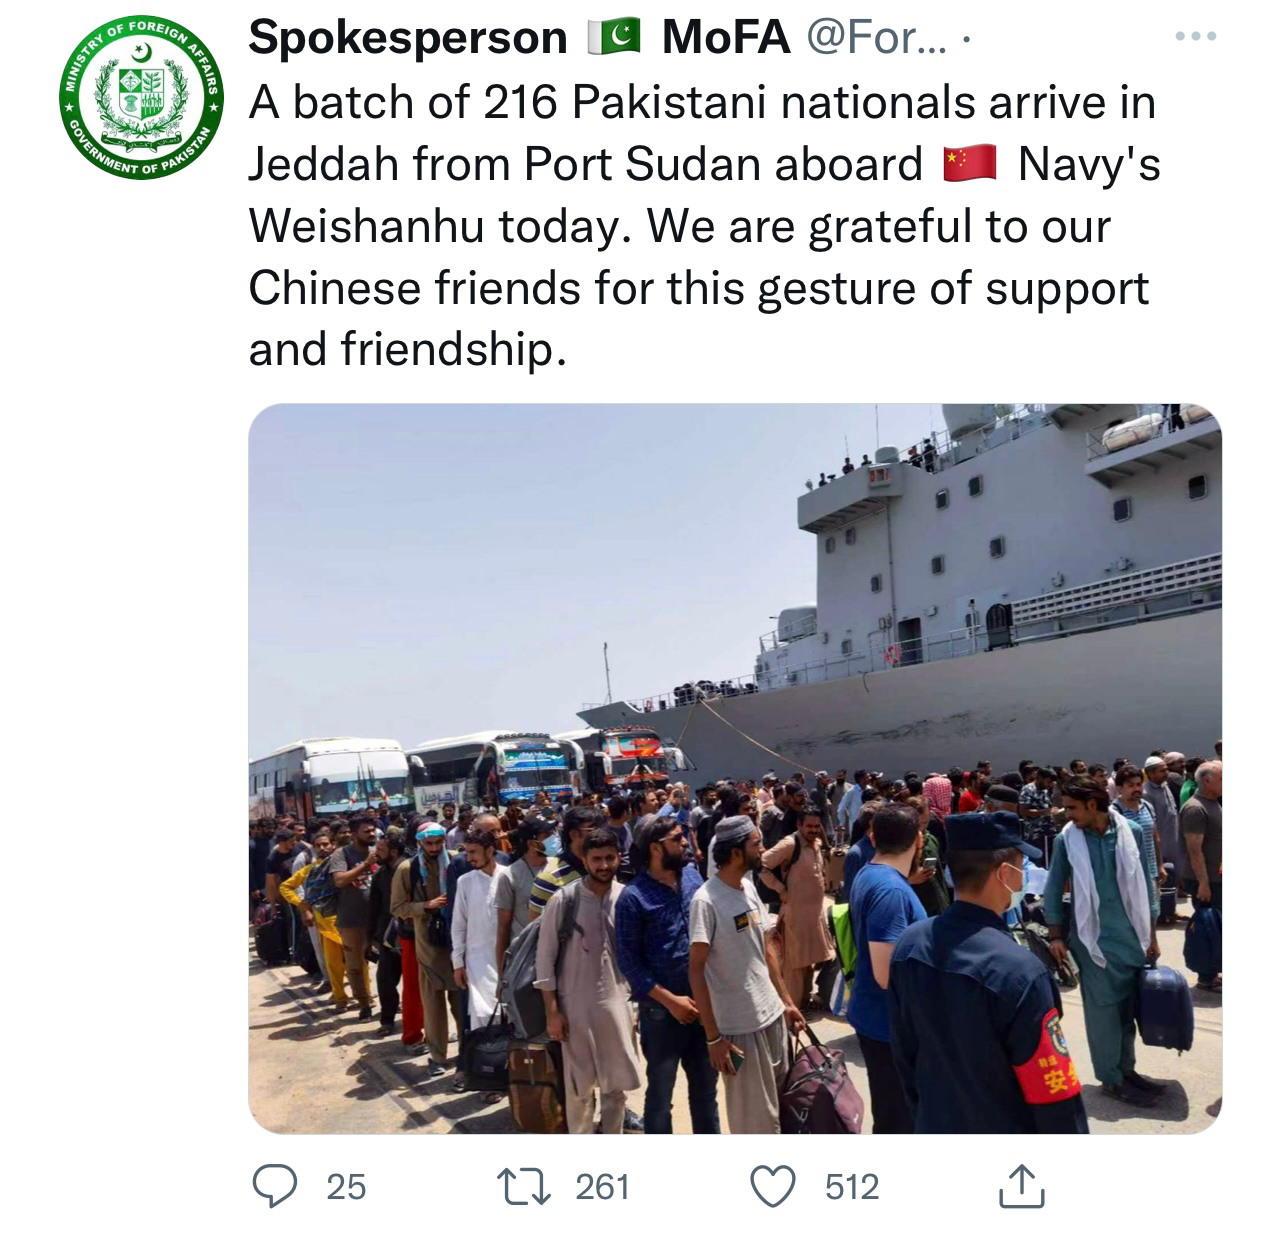 China helps evacuate 216 Pakistani citizens from Sudan